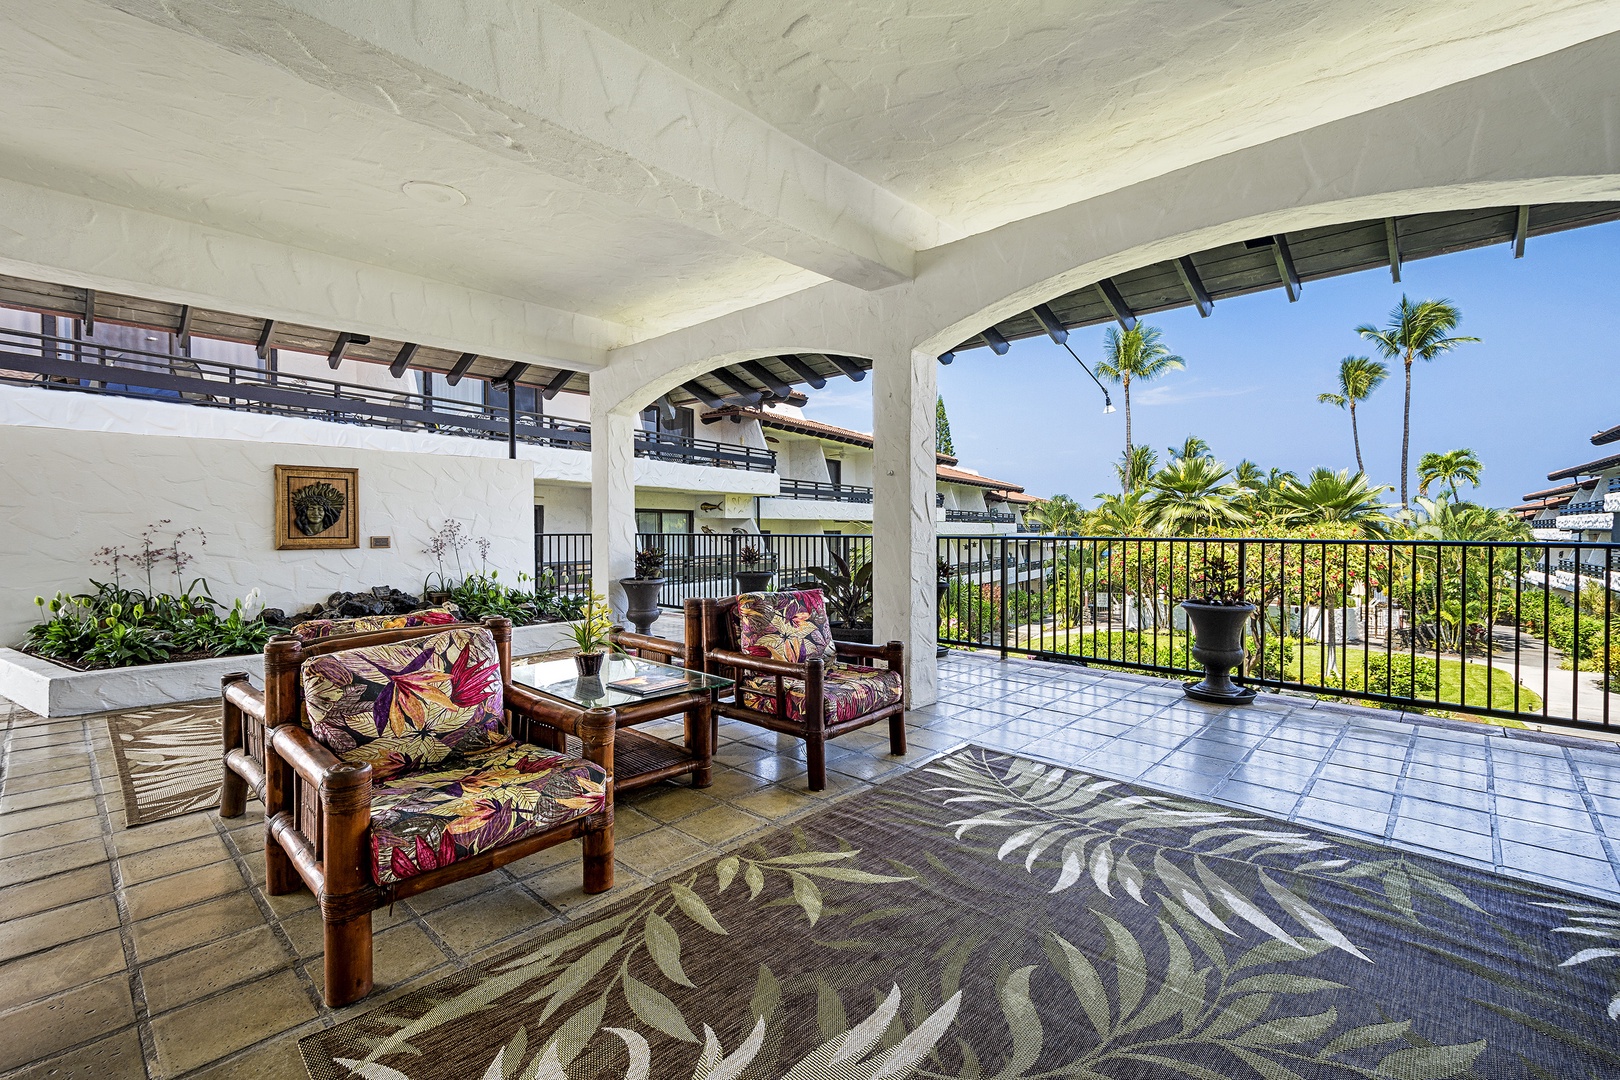 Kailua Kona Vacation Rentals, Casa De Emdeko 336 - Casa De Emdeko shaded seating area at the entrance to the complex